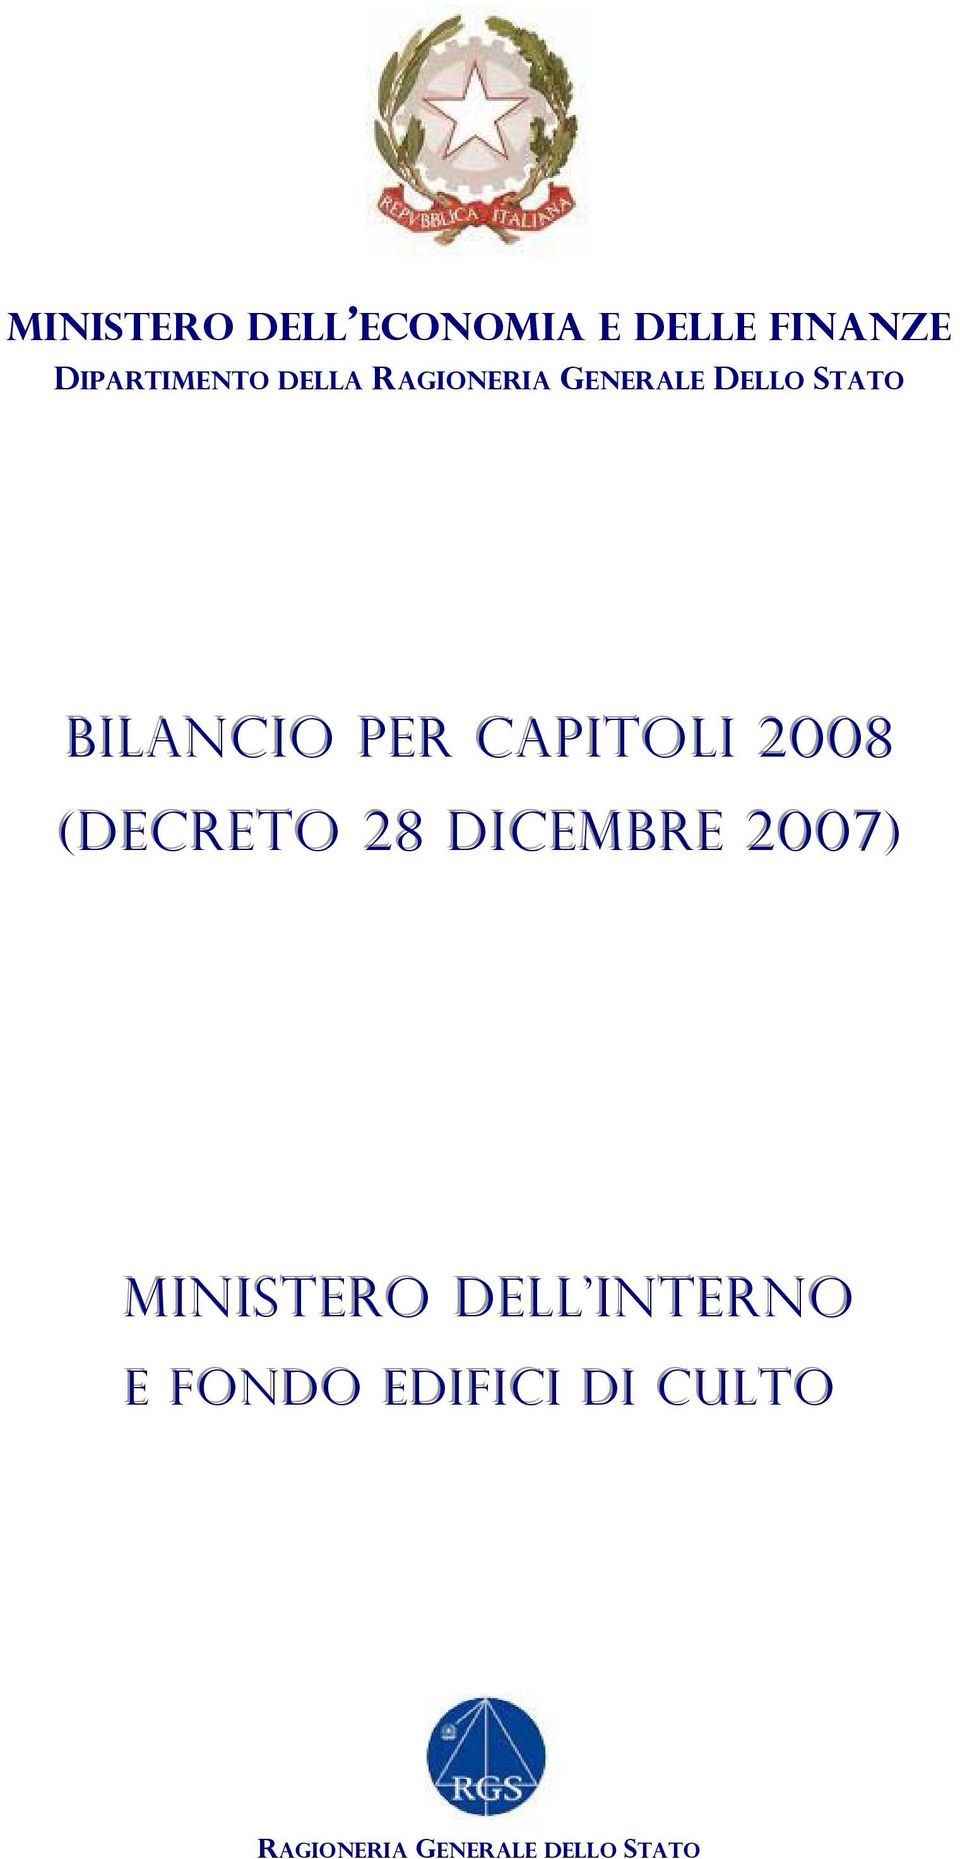 2008 ((DECRETO 28 DIICEMBRE 2007)) Miiniistero dell